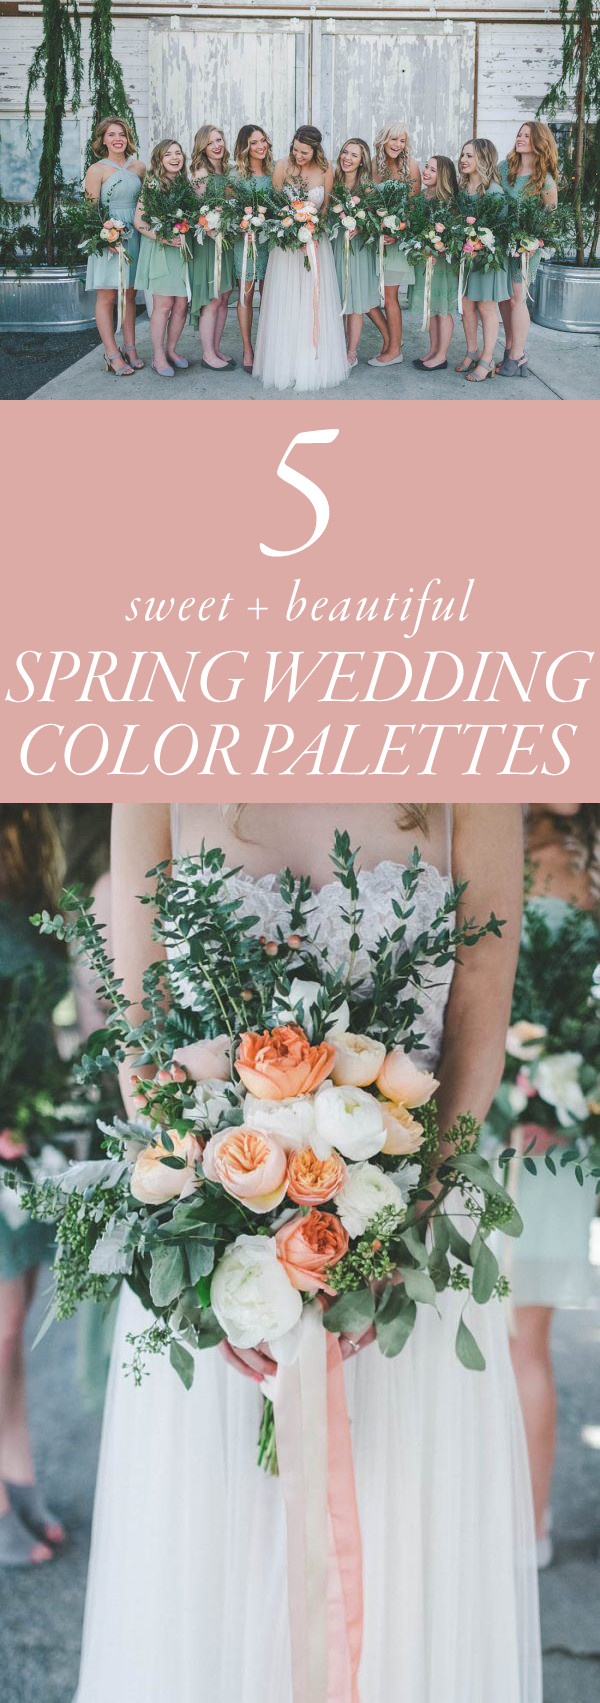 Springtime Wedding Themes
 5 Sweet Spring Wedding Color Palette Ideas Weddings